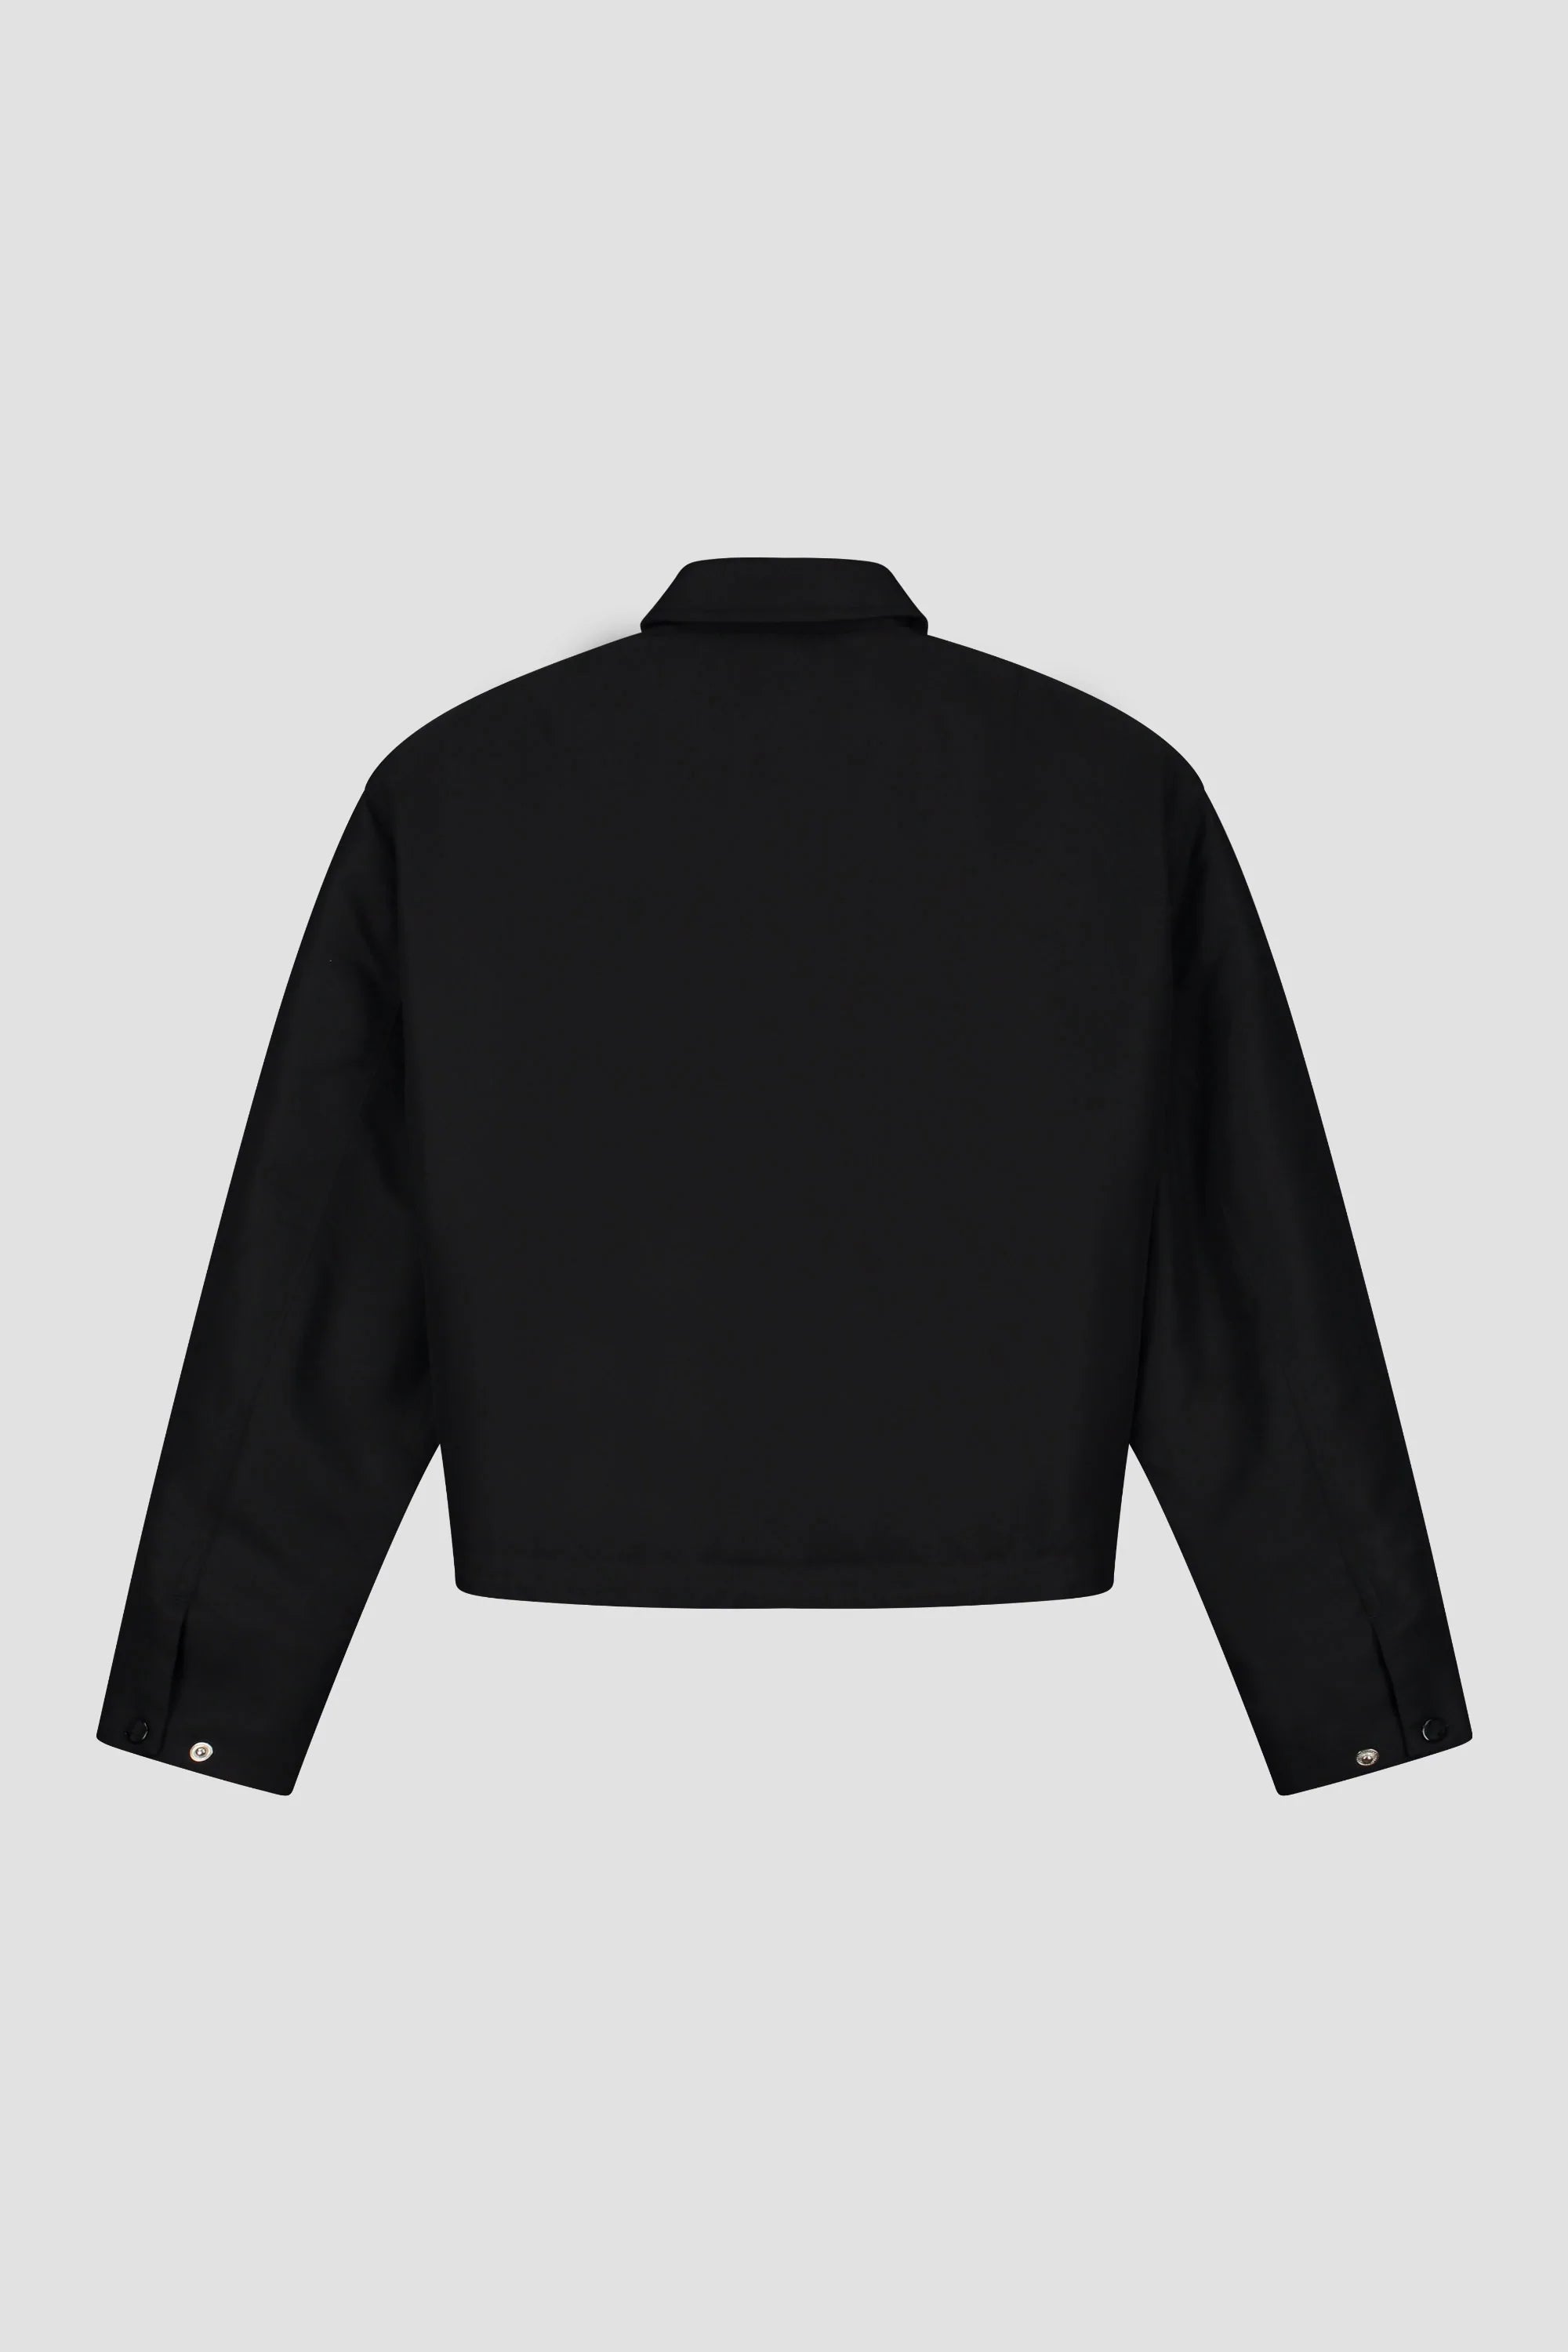 Olaf WMN Cropped Jacket BLACK